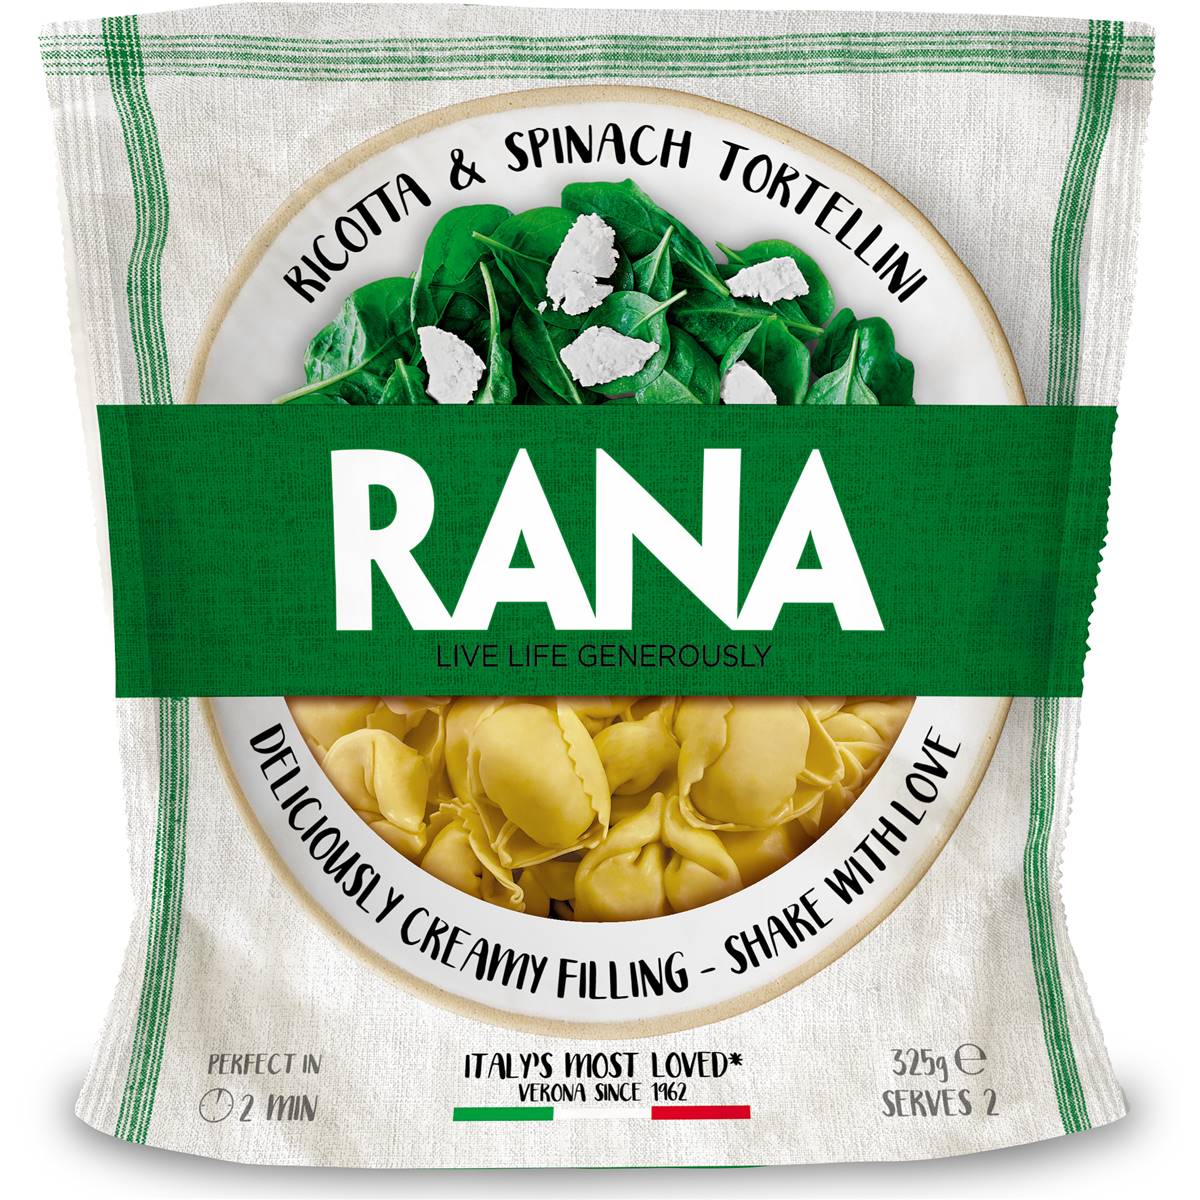 Calories in Rana Ricotta & Spinach Tortellini